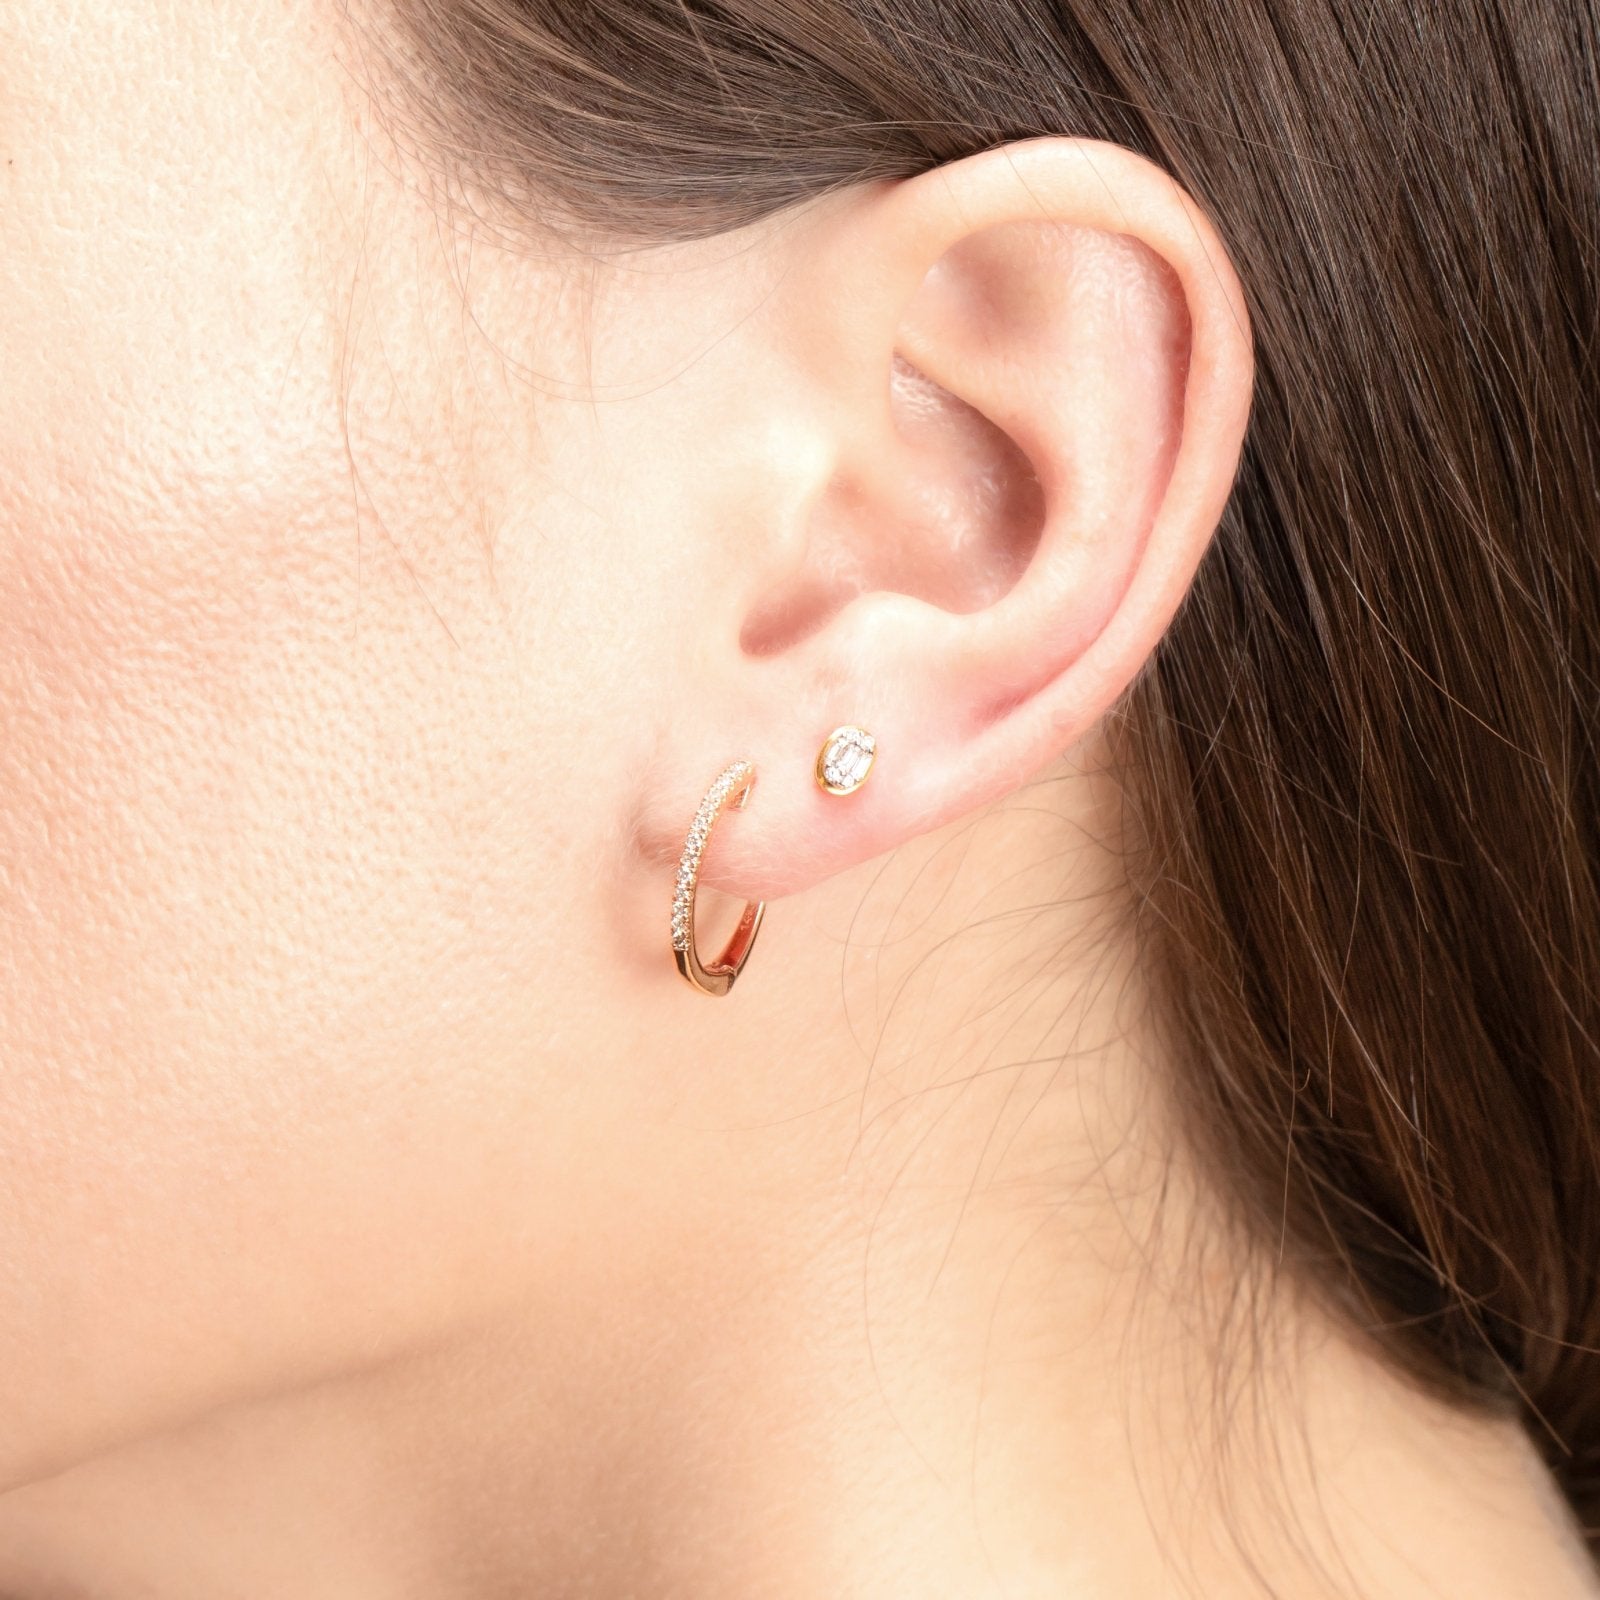 Oval Mixed Diamond Screw Back Earrings in Solid 10k Yellow Gold Earrings Estella Collection #product_description# 17800 10k Birthstone Birthstone Earrings #tag4# #tag5# #tag6# #tag7# #tag8# #tag9# #tag10#